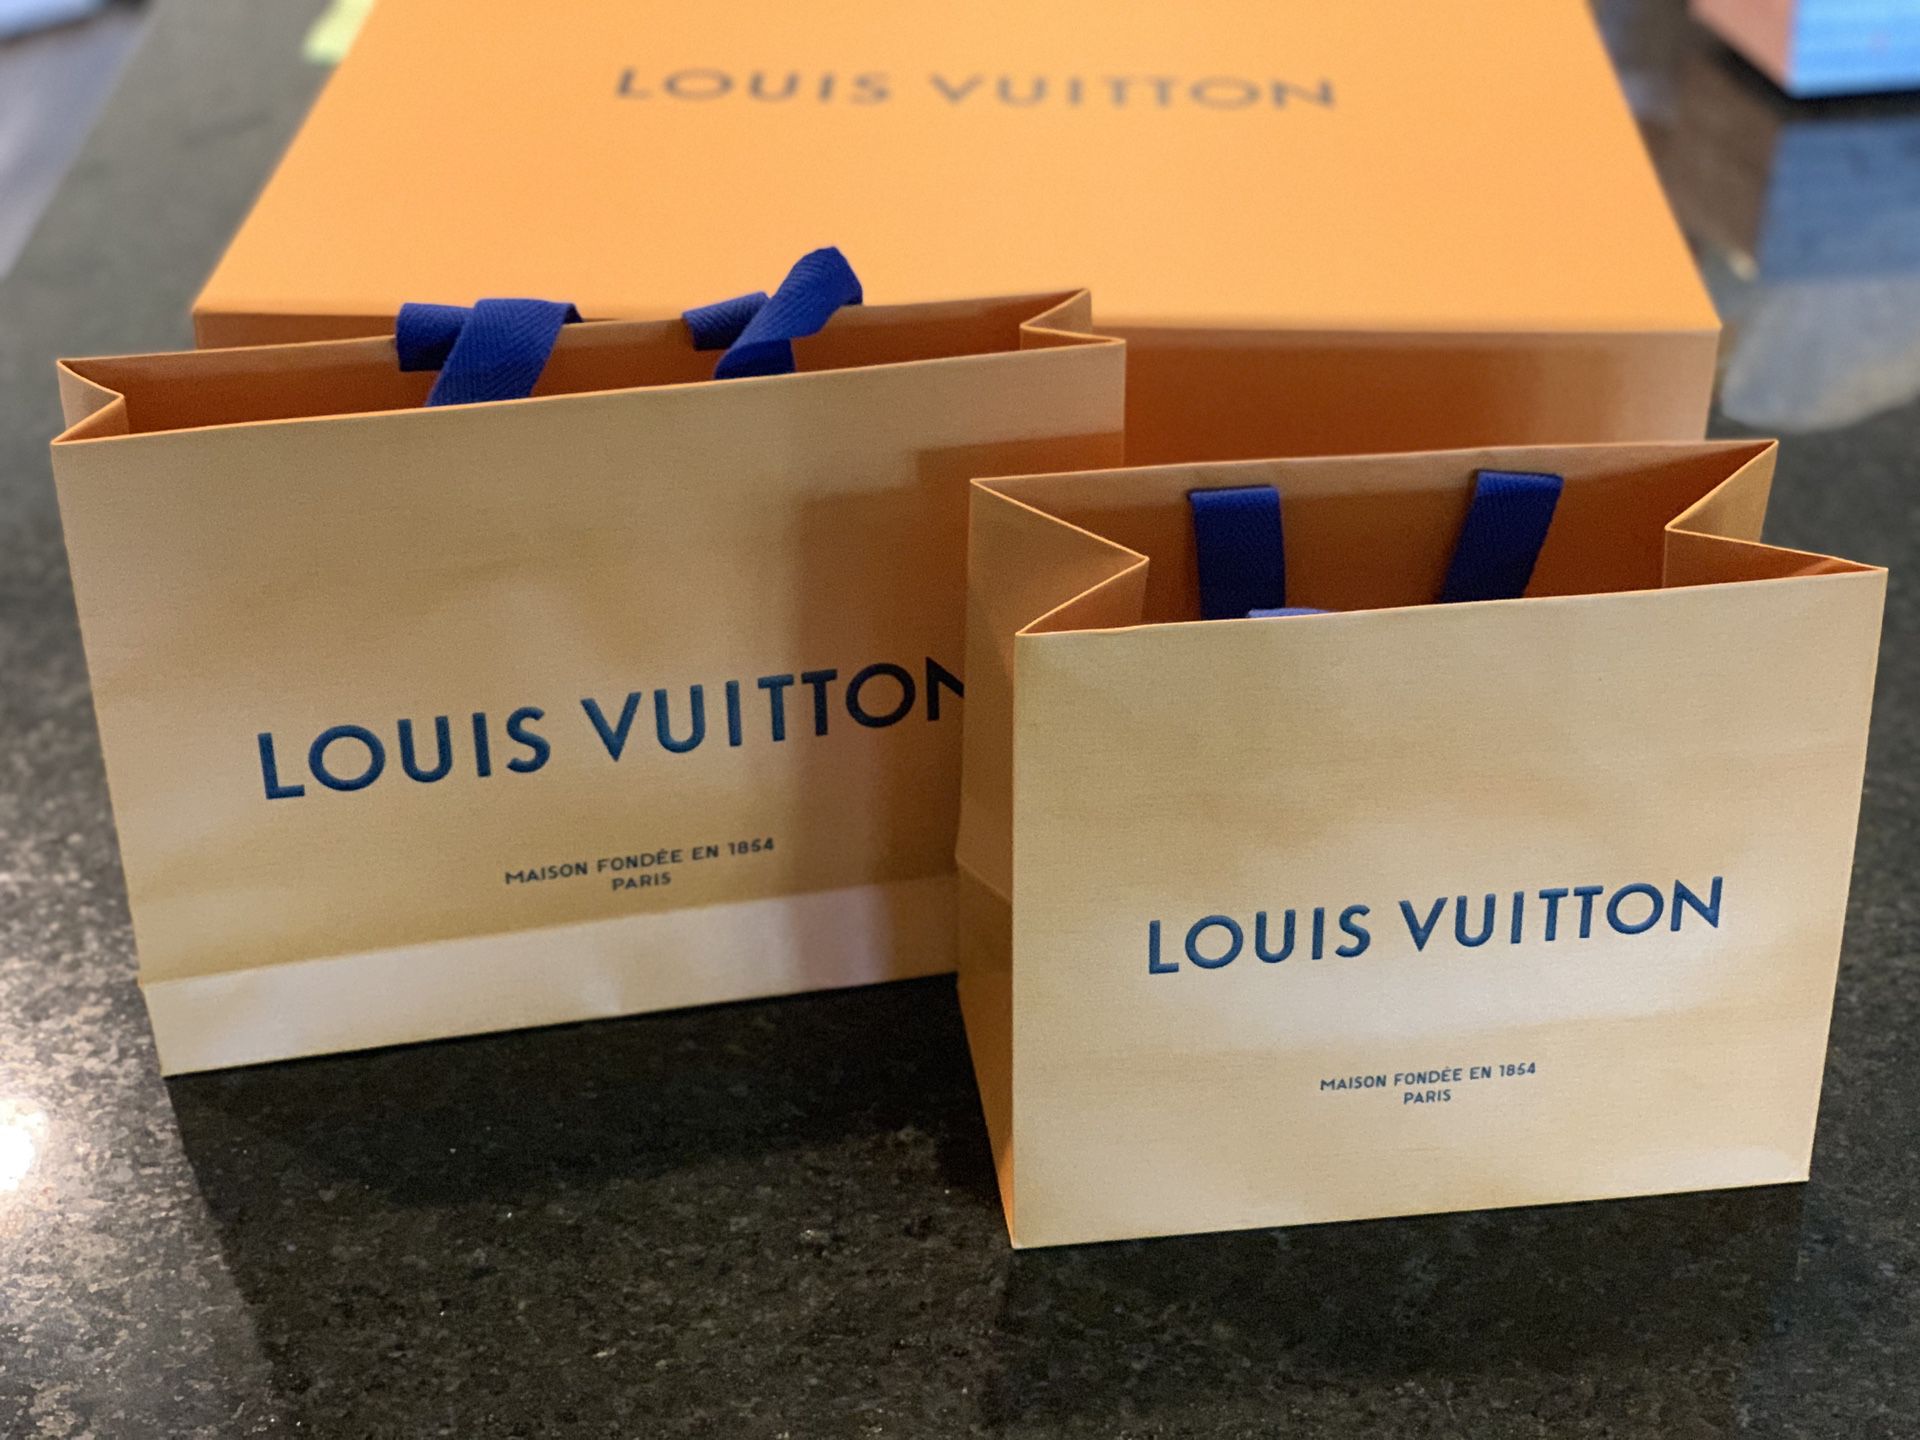 Louis Vuitton White and Rainbow Durag for Sale in Mesa, AZ - OfferUp